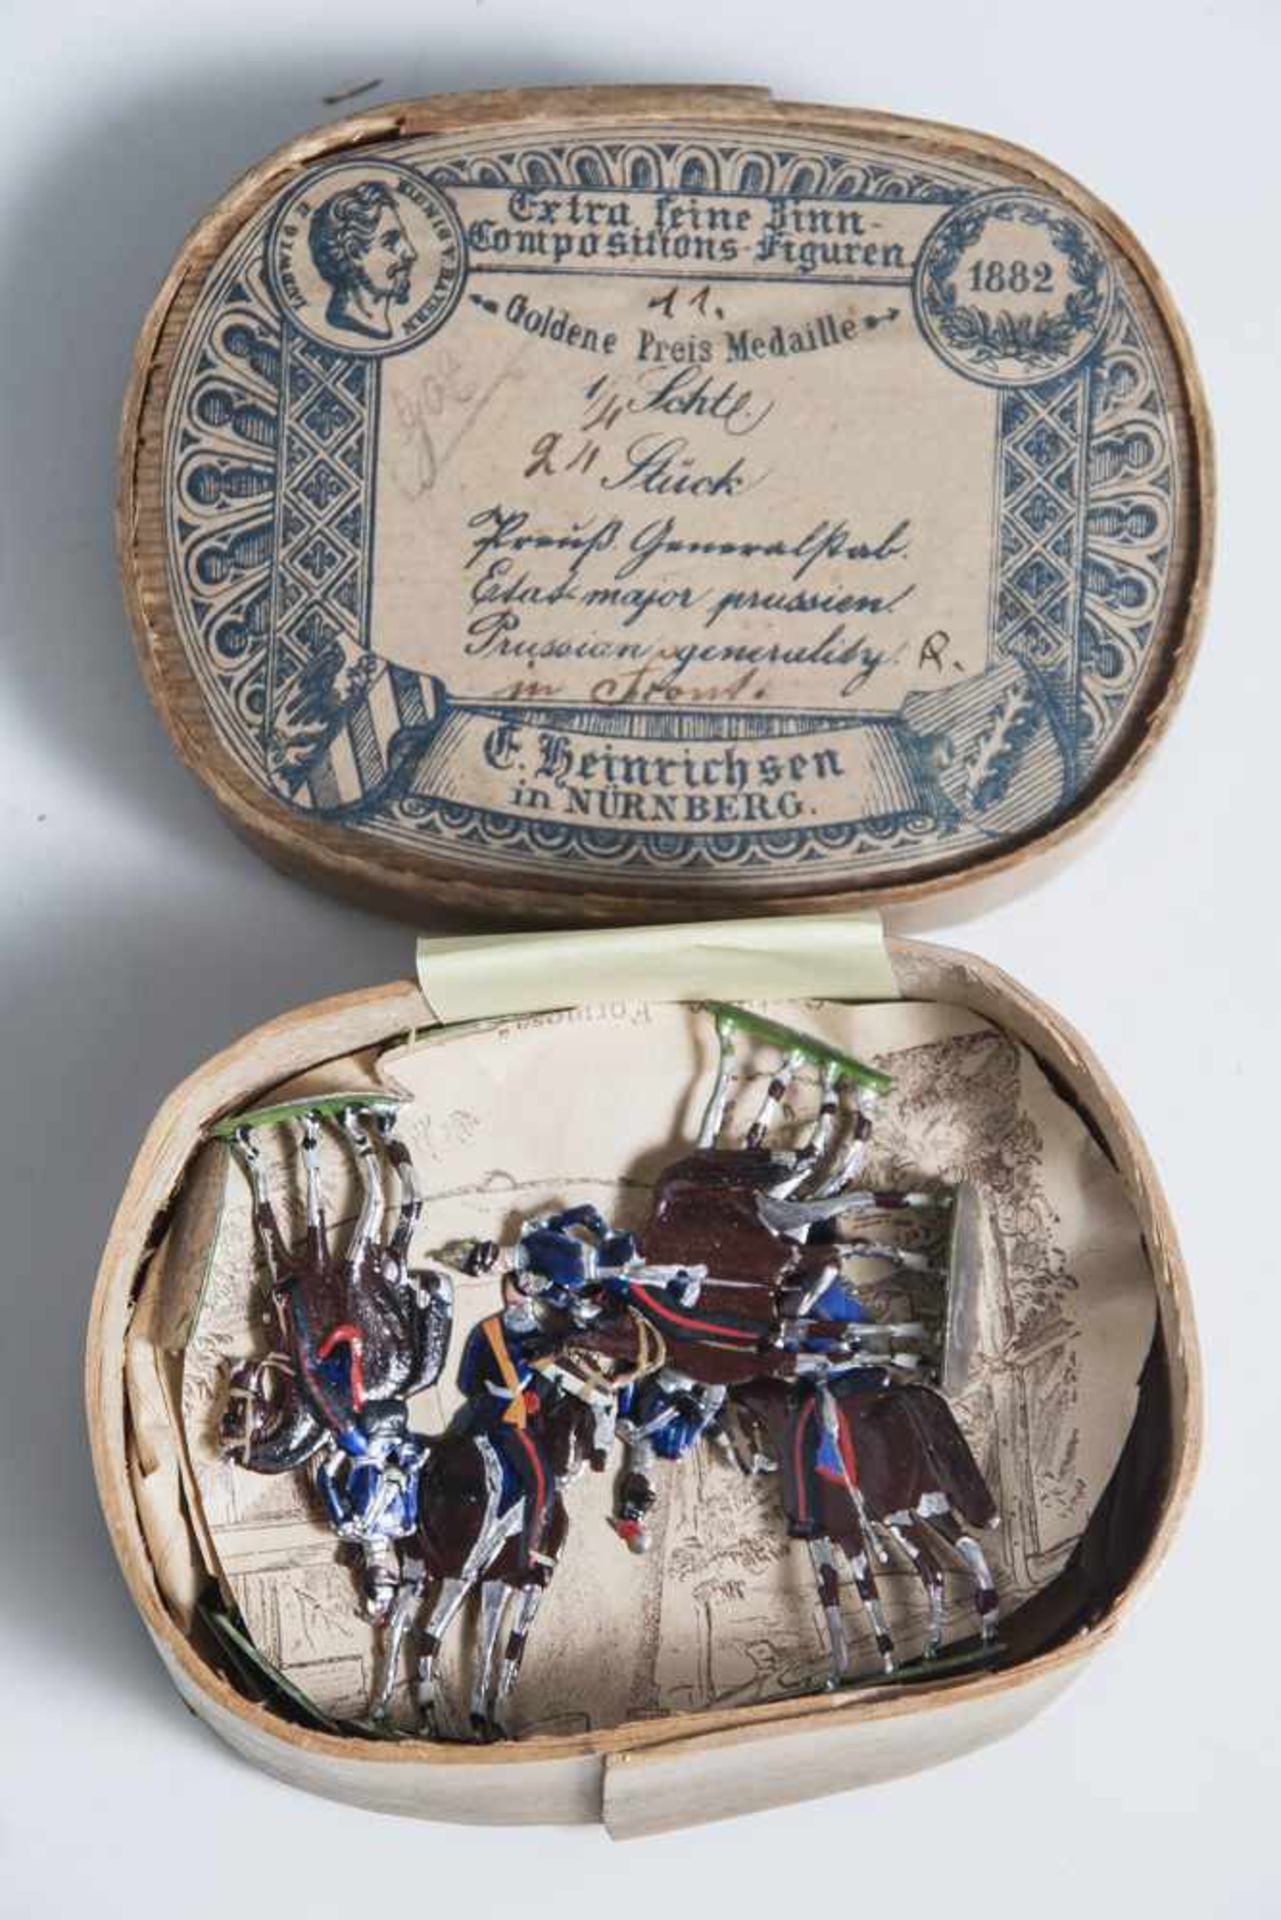 21 Zinnfiguren, "Preuß. Generalstab.", Ernst Heinrichsen, Nürnberg, Goldene Preis Medaille. In